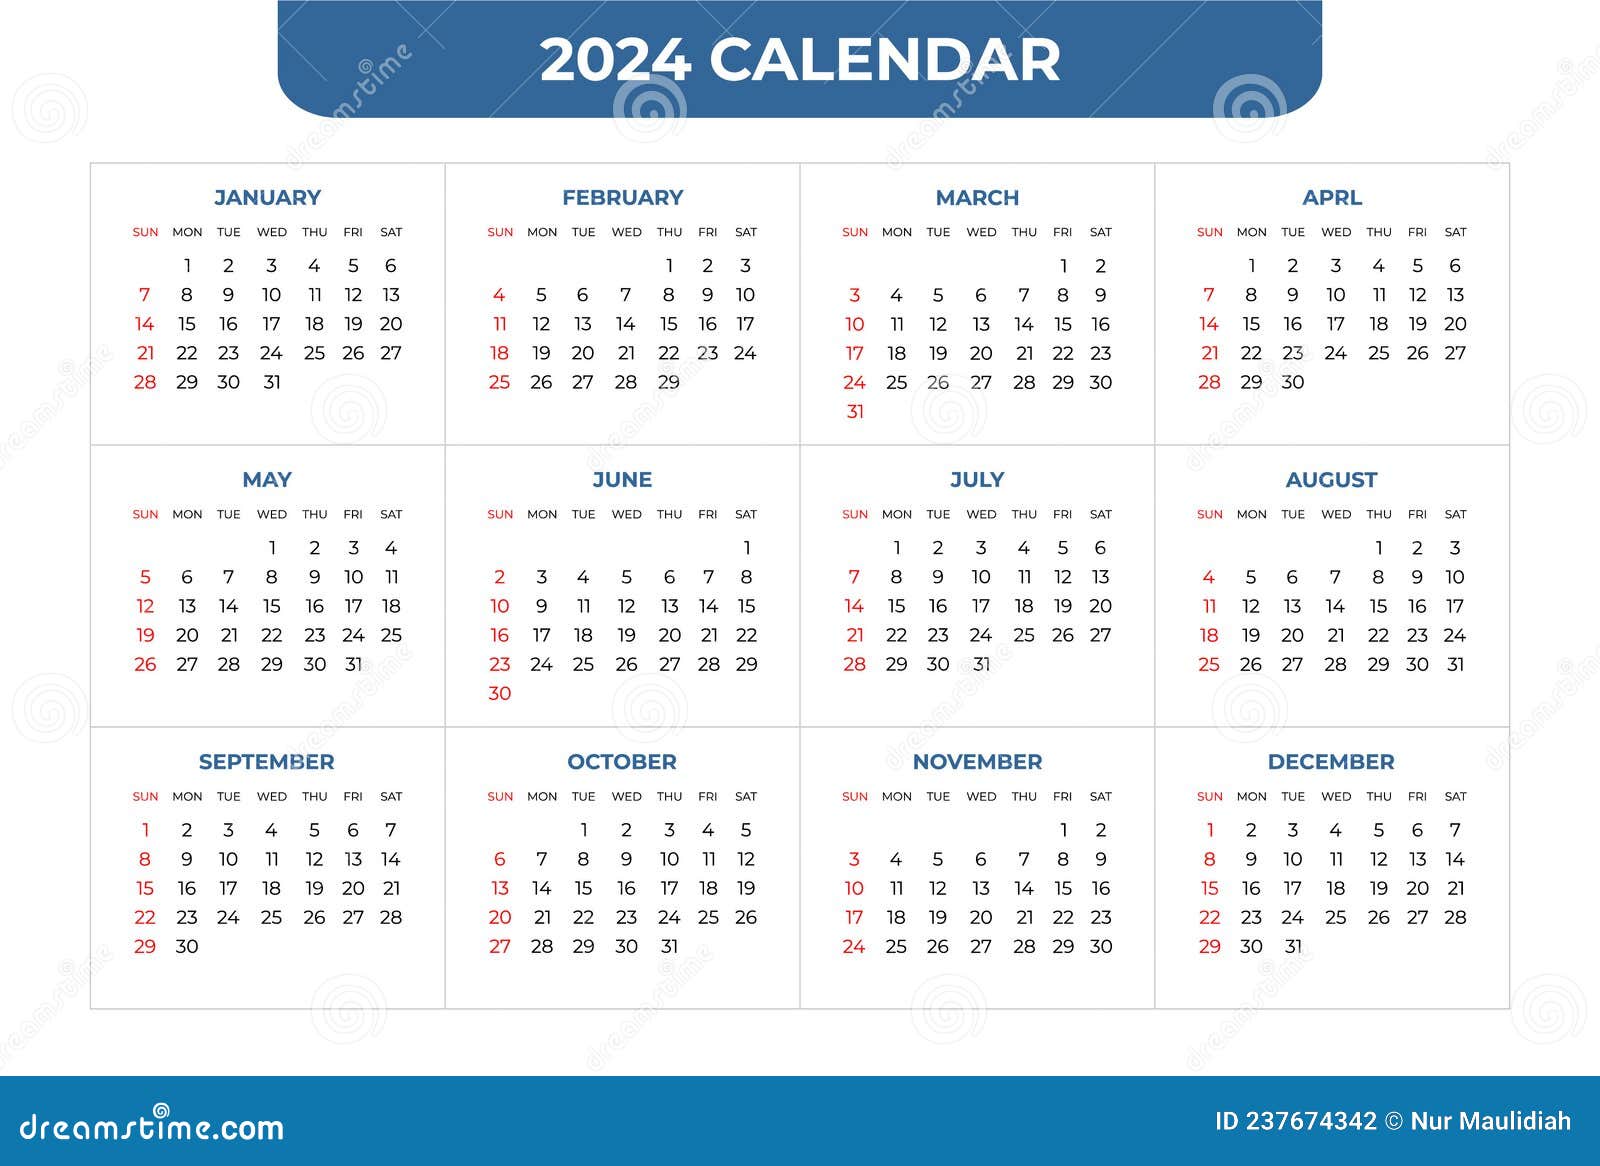 Calendar 2024 Template, Monthly Calendar Template For 2024 Year. Wall